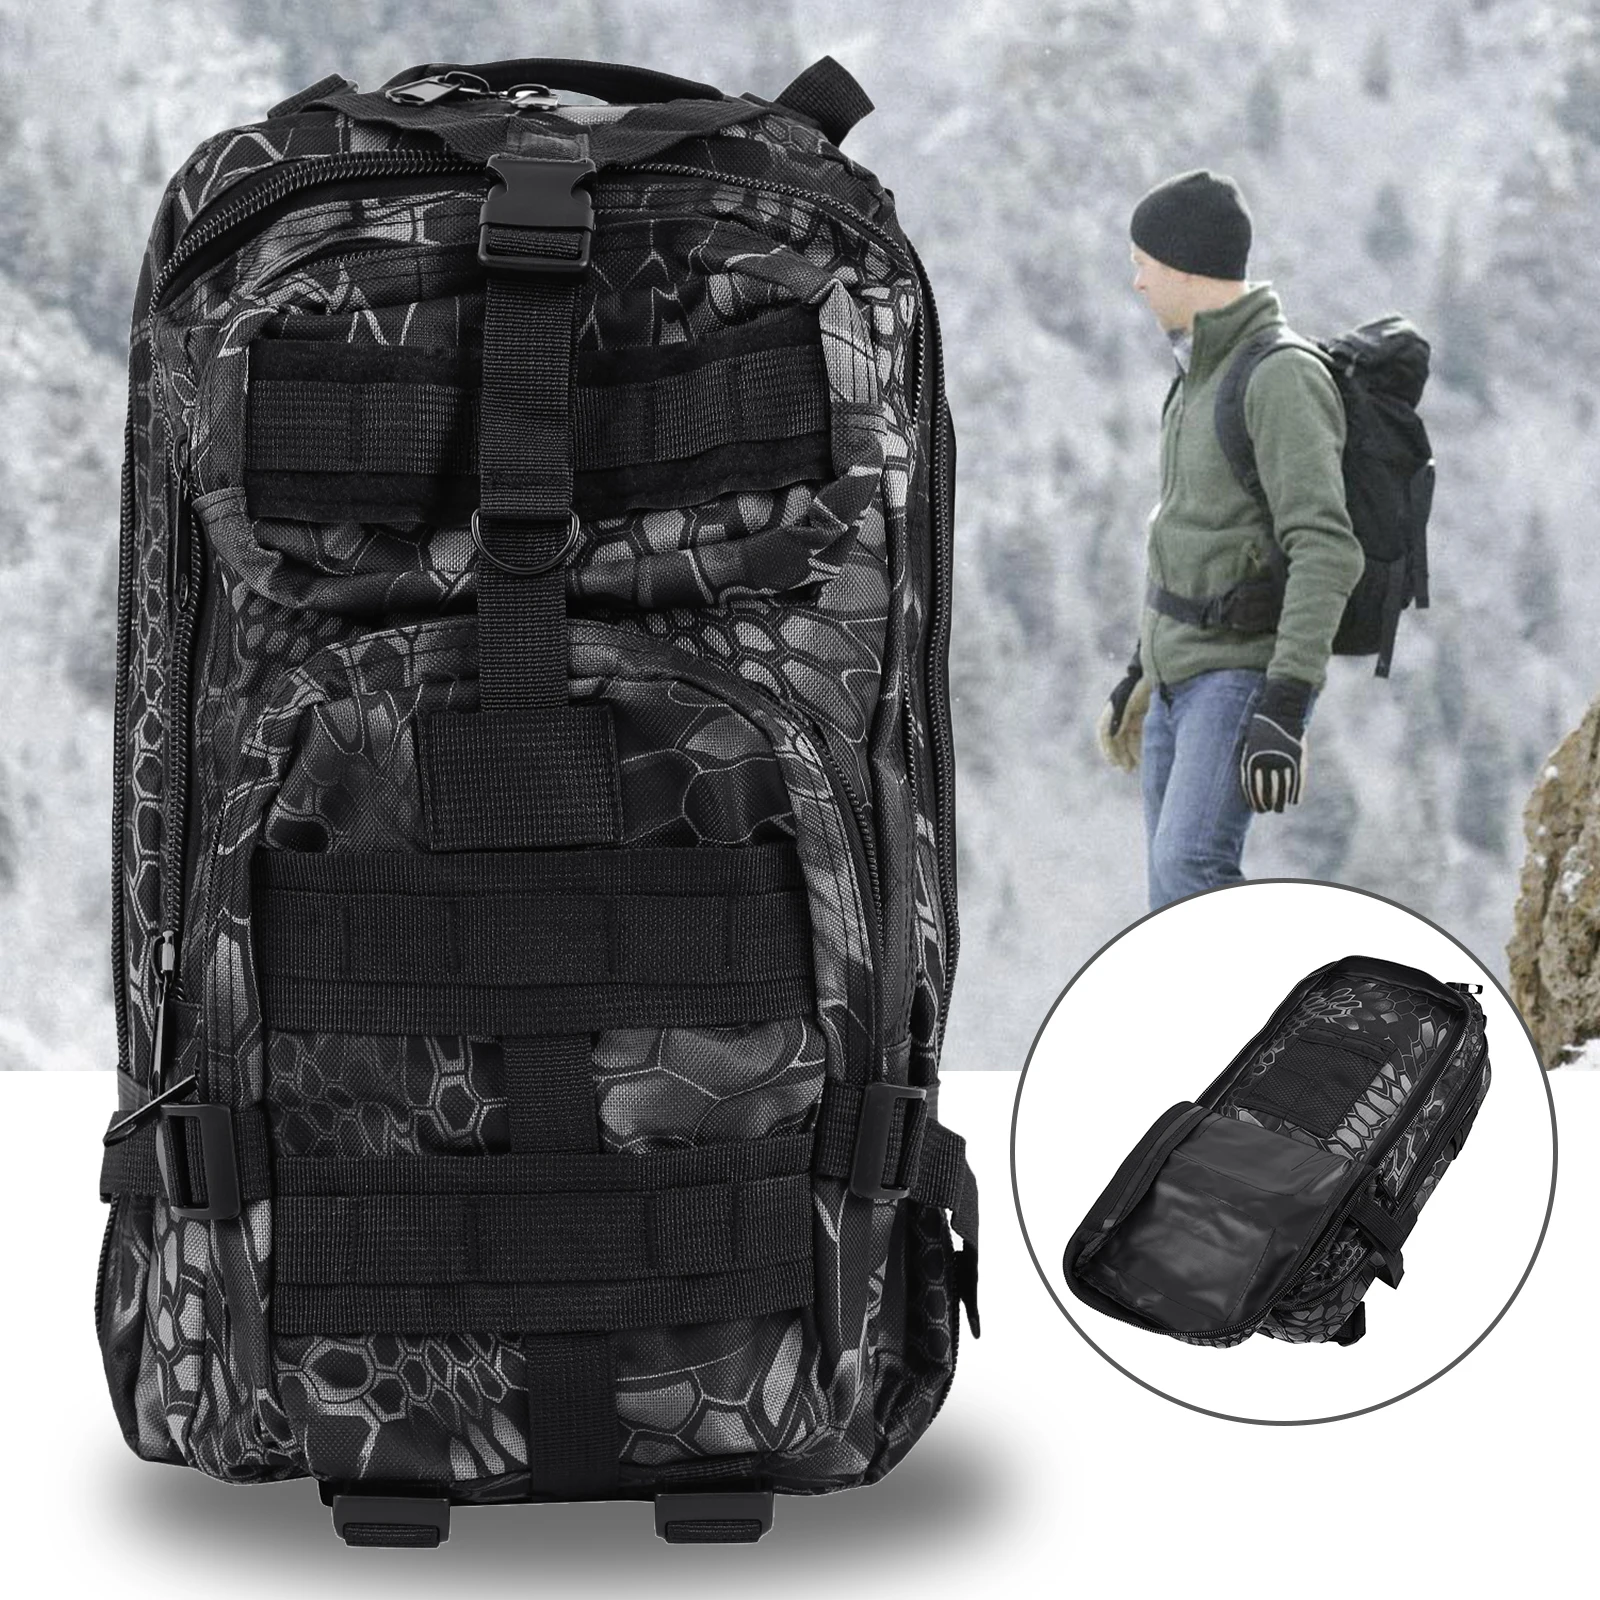 

30L 600D Waterproof Backpack Outdoor Pack Military Rucksacks Tactical Army Sports Camping Hiking Trekking Fishing Hunting Bag